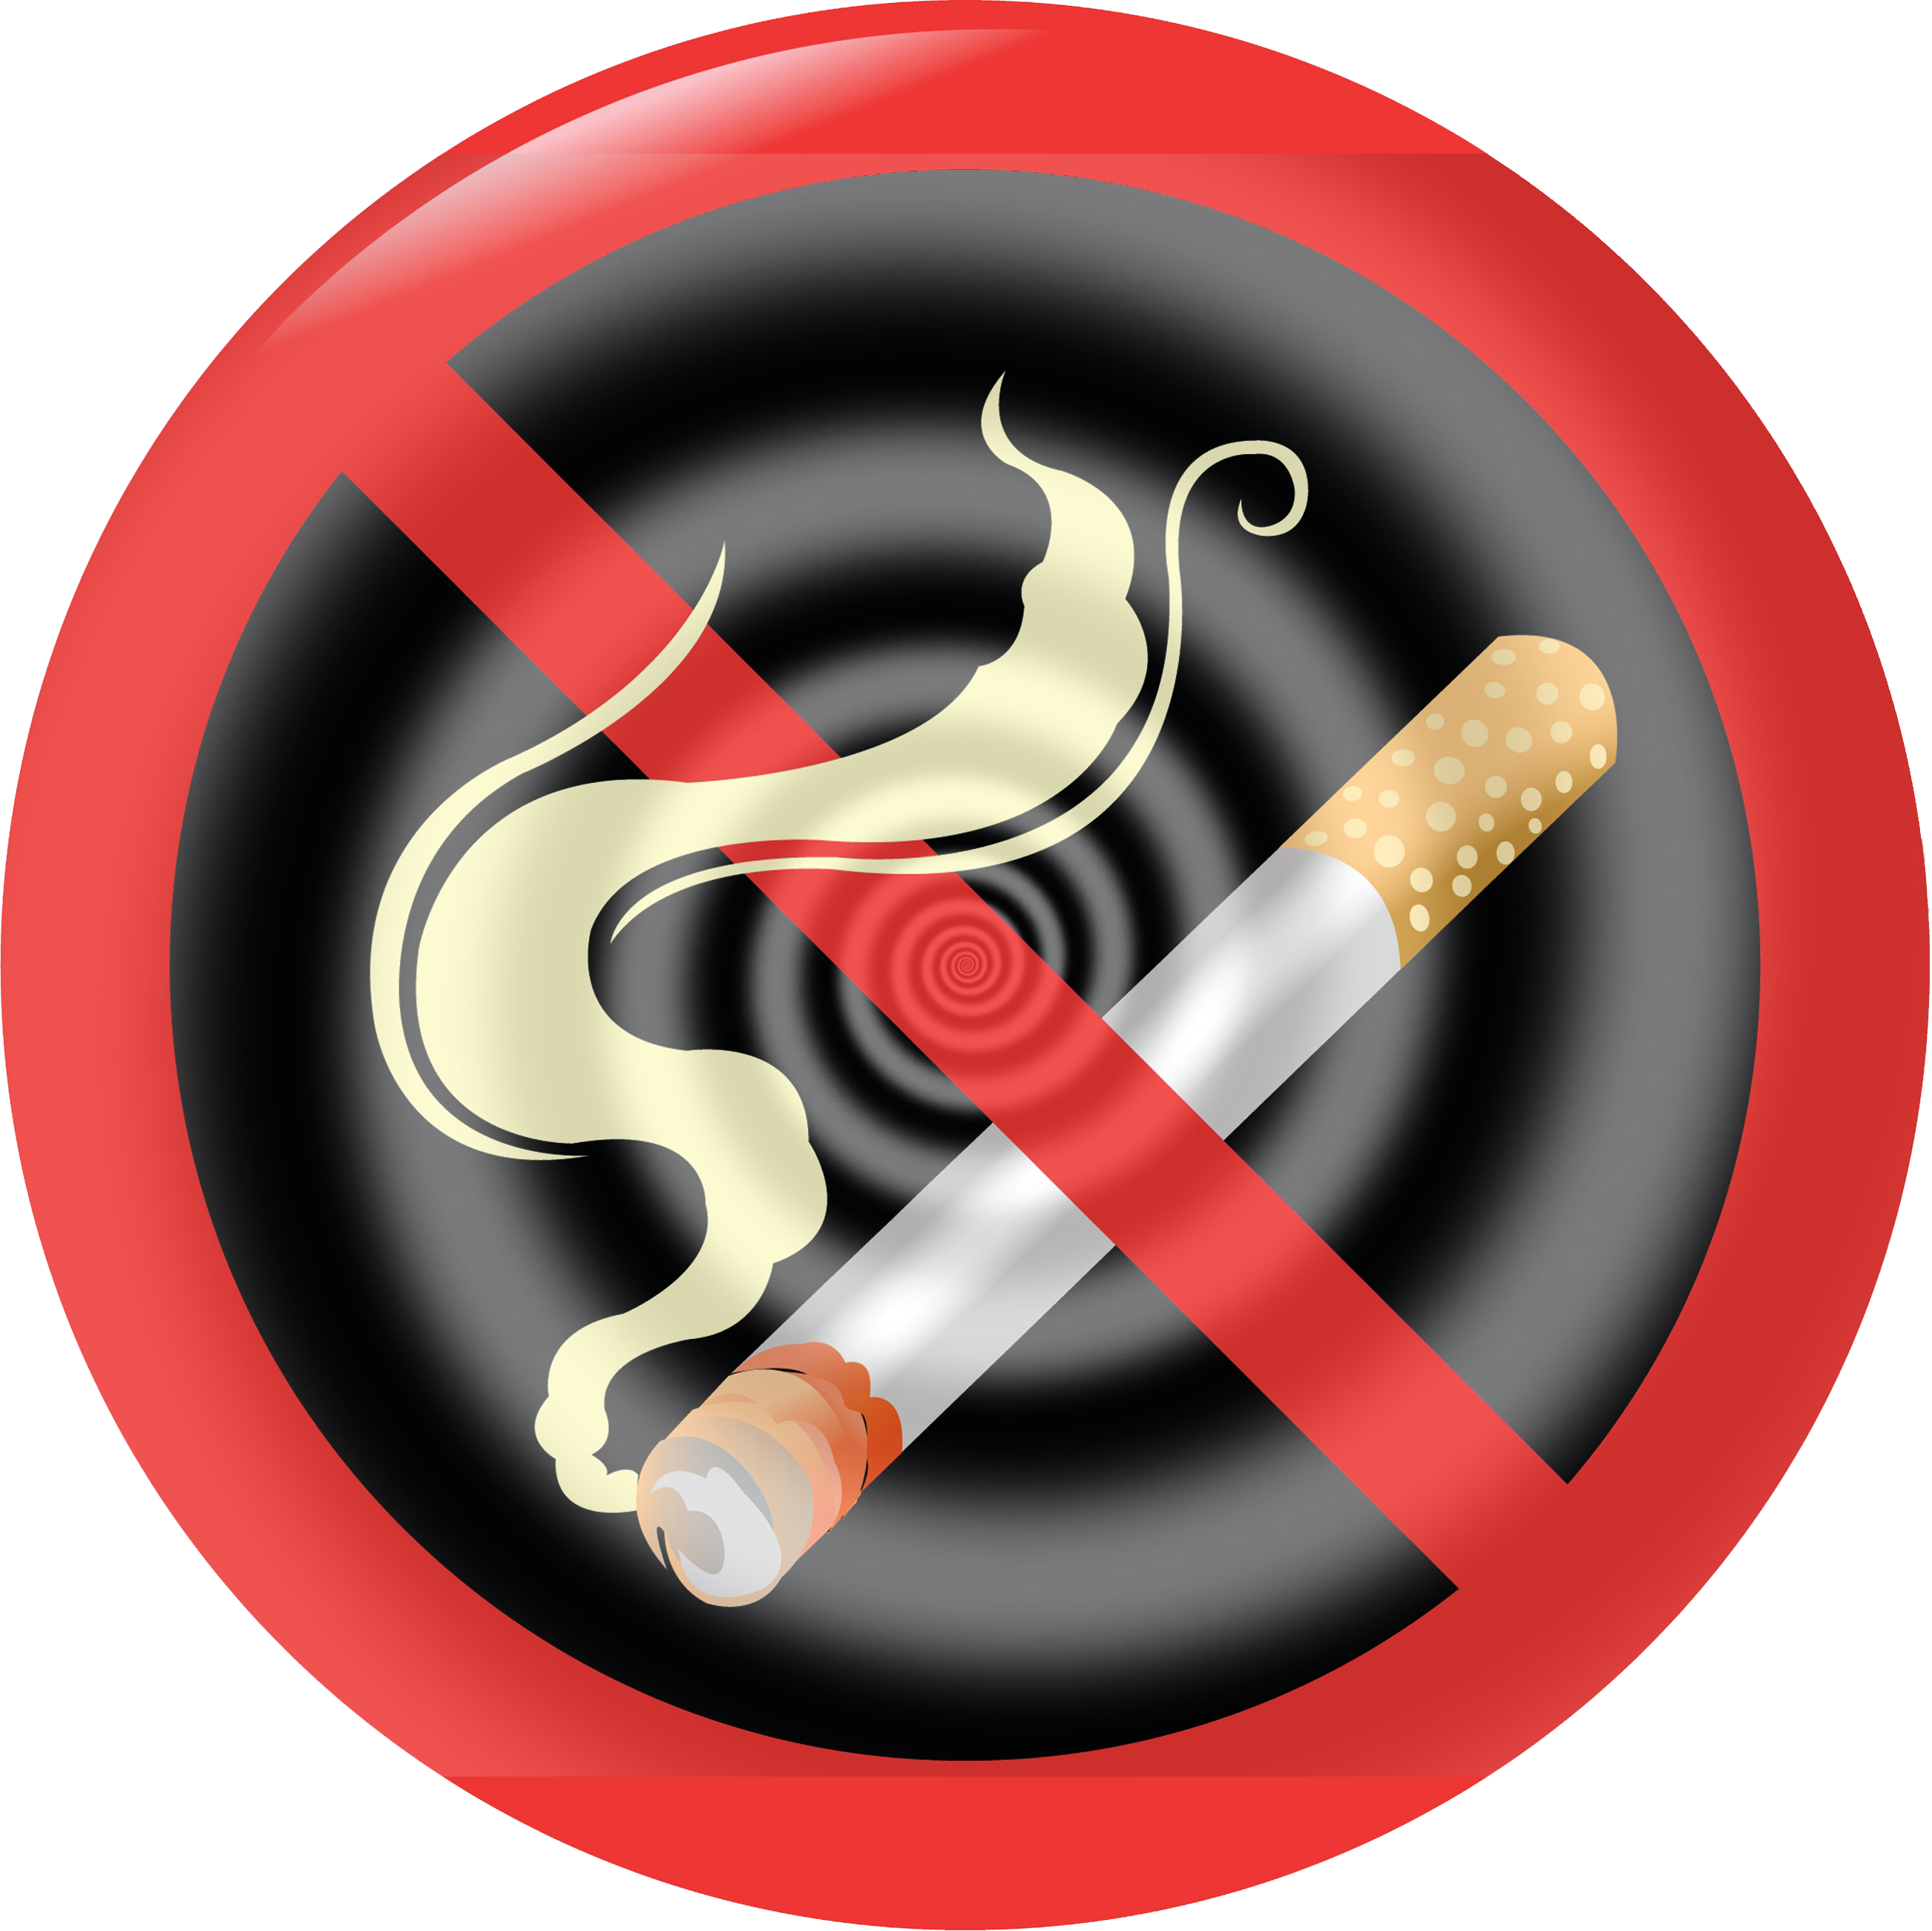 Stop Smoking Sing From Scott Christie - Smoking Cessation (2604x2602)